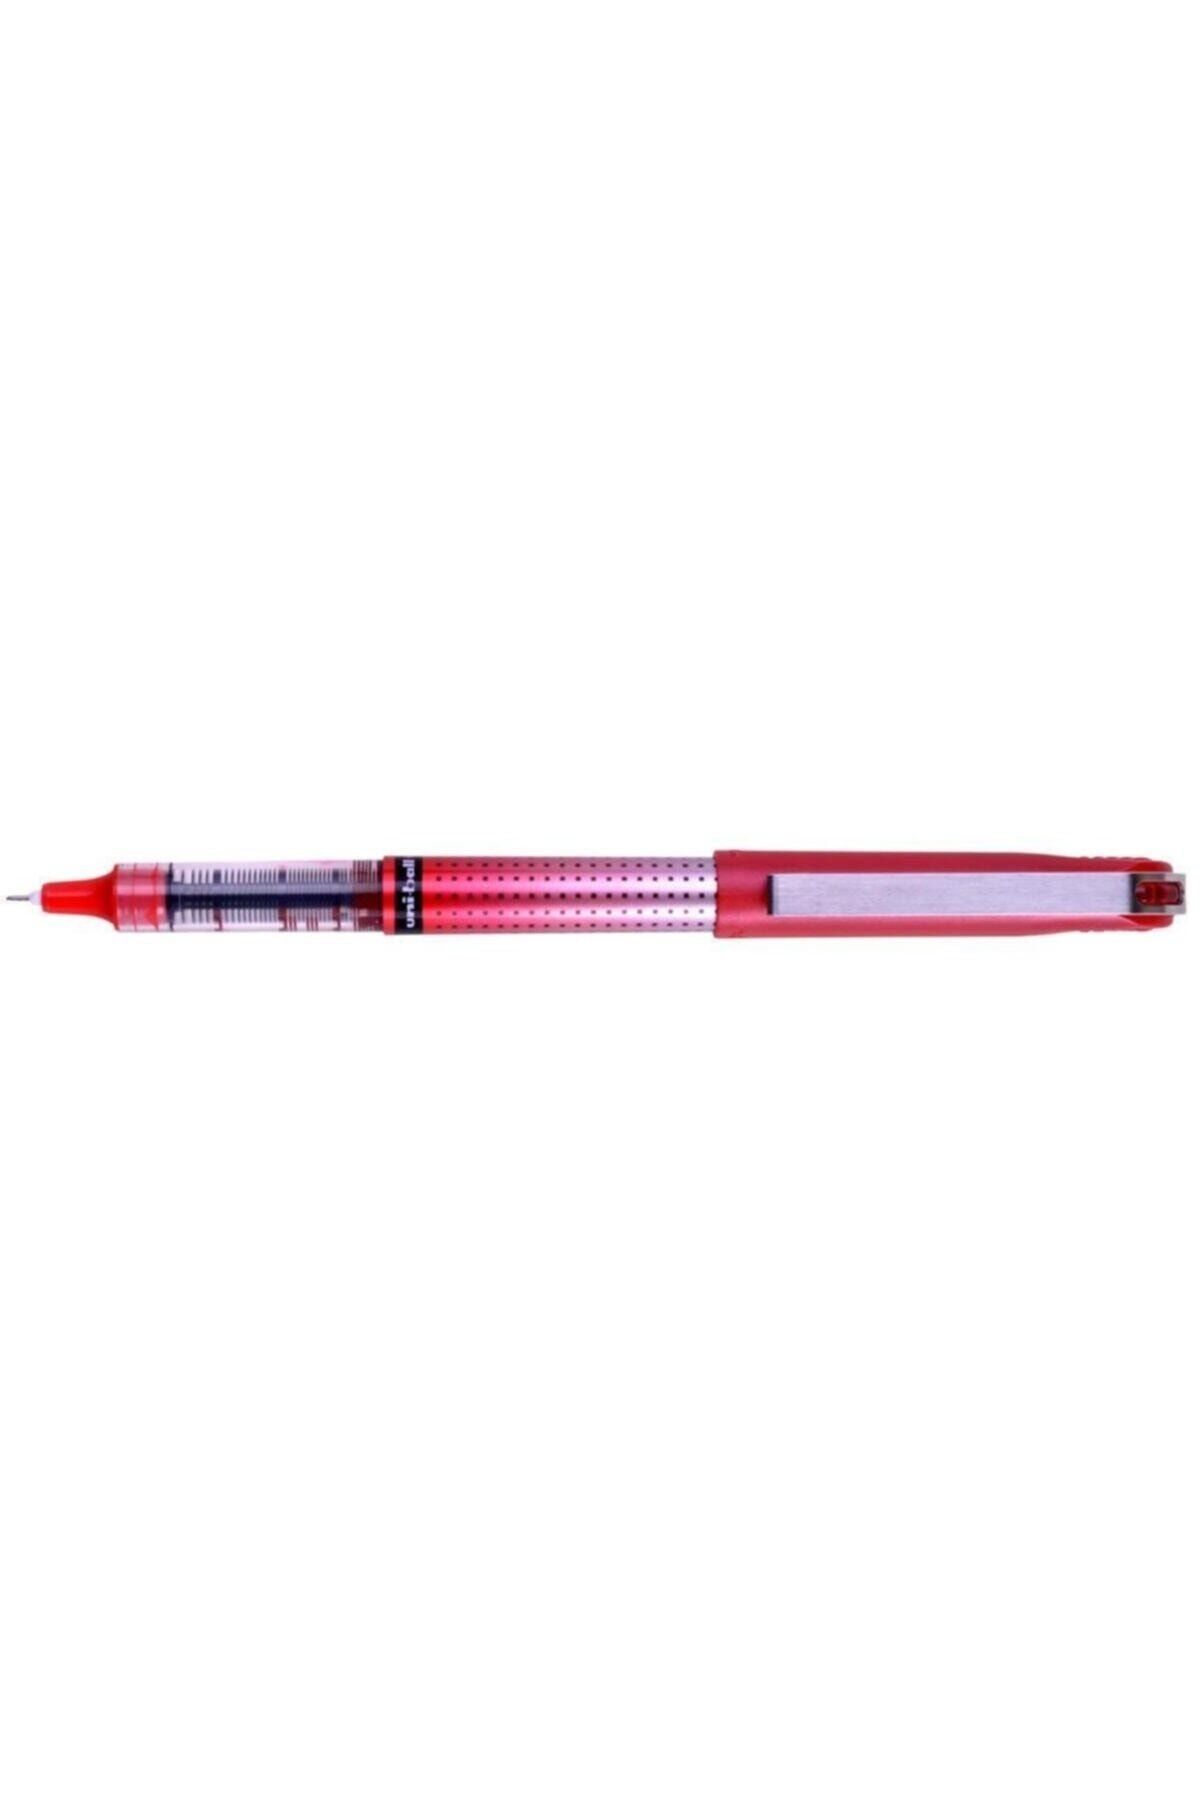 uni-ball Ub-185s Micro Roller Kalem Eye Needle Iğne Uçlu 0.5 Mm Kırmızı (12 Li Kutu)